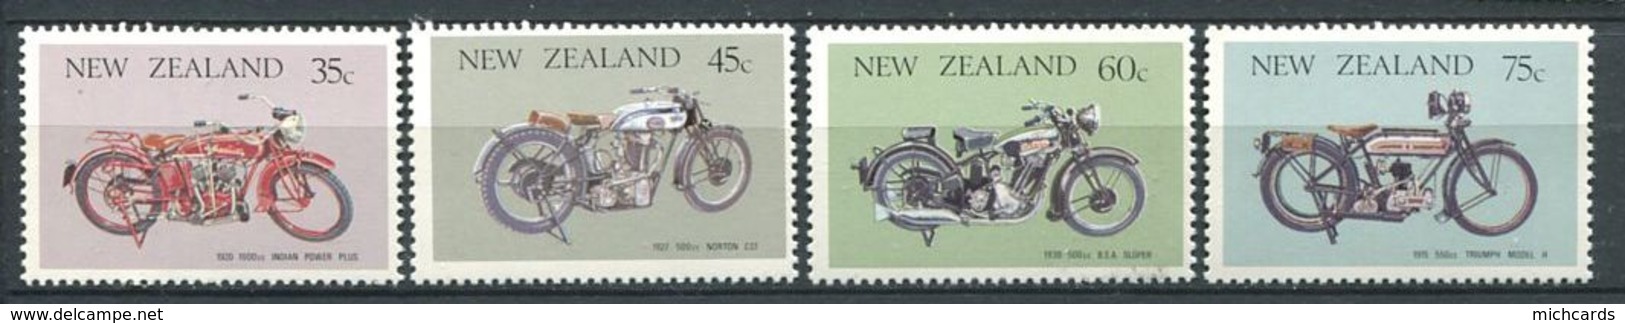 240 NOUVELLE ZELANDE 1986 - Yvert 920/23 -  Moto Cyclette - Neuf ** (MNH) Sans Trace De Charniere - Neufs